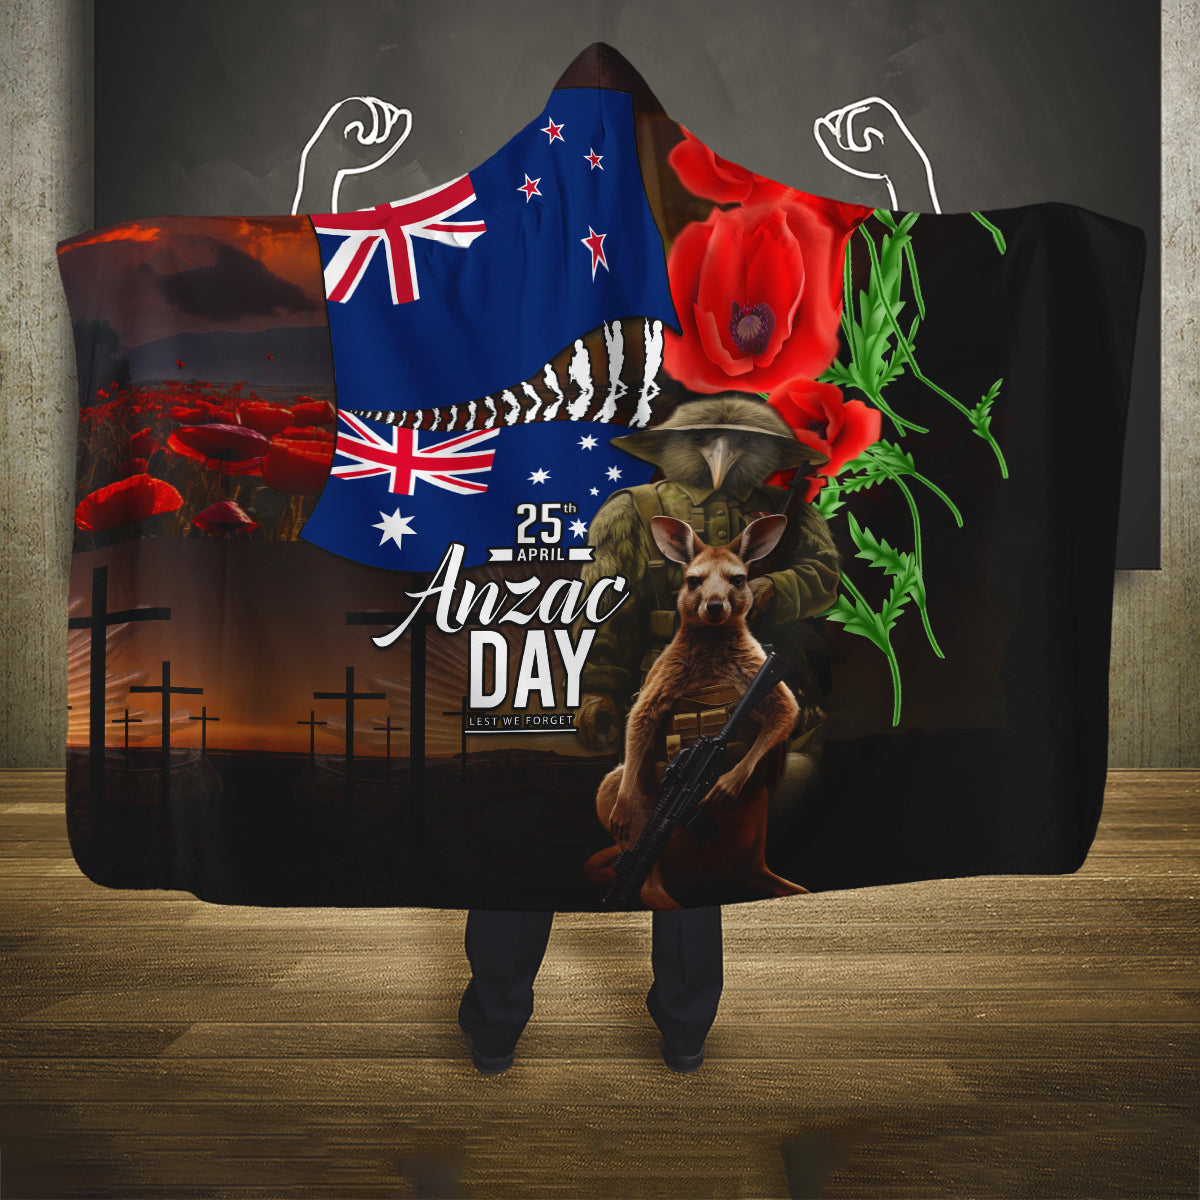 New Zealand and Australia ANZAC Day Hooded Blanket National Flag mix Kiwi Bird and Kangaroo Soldier Style